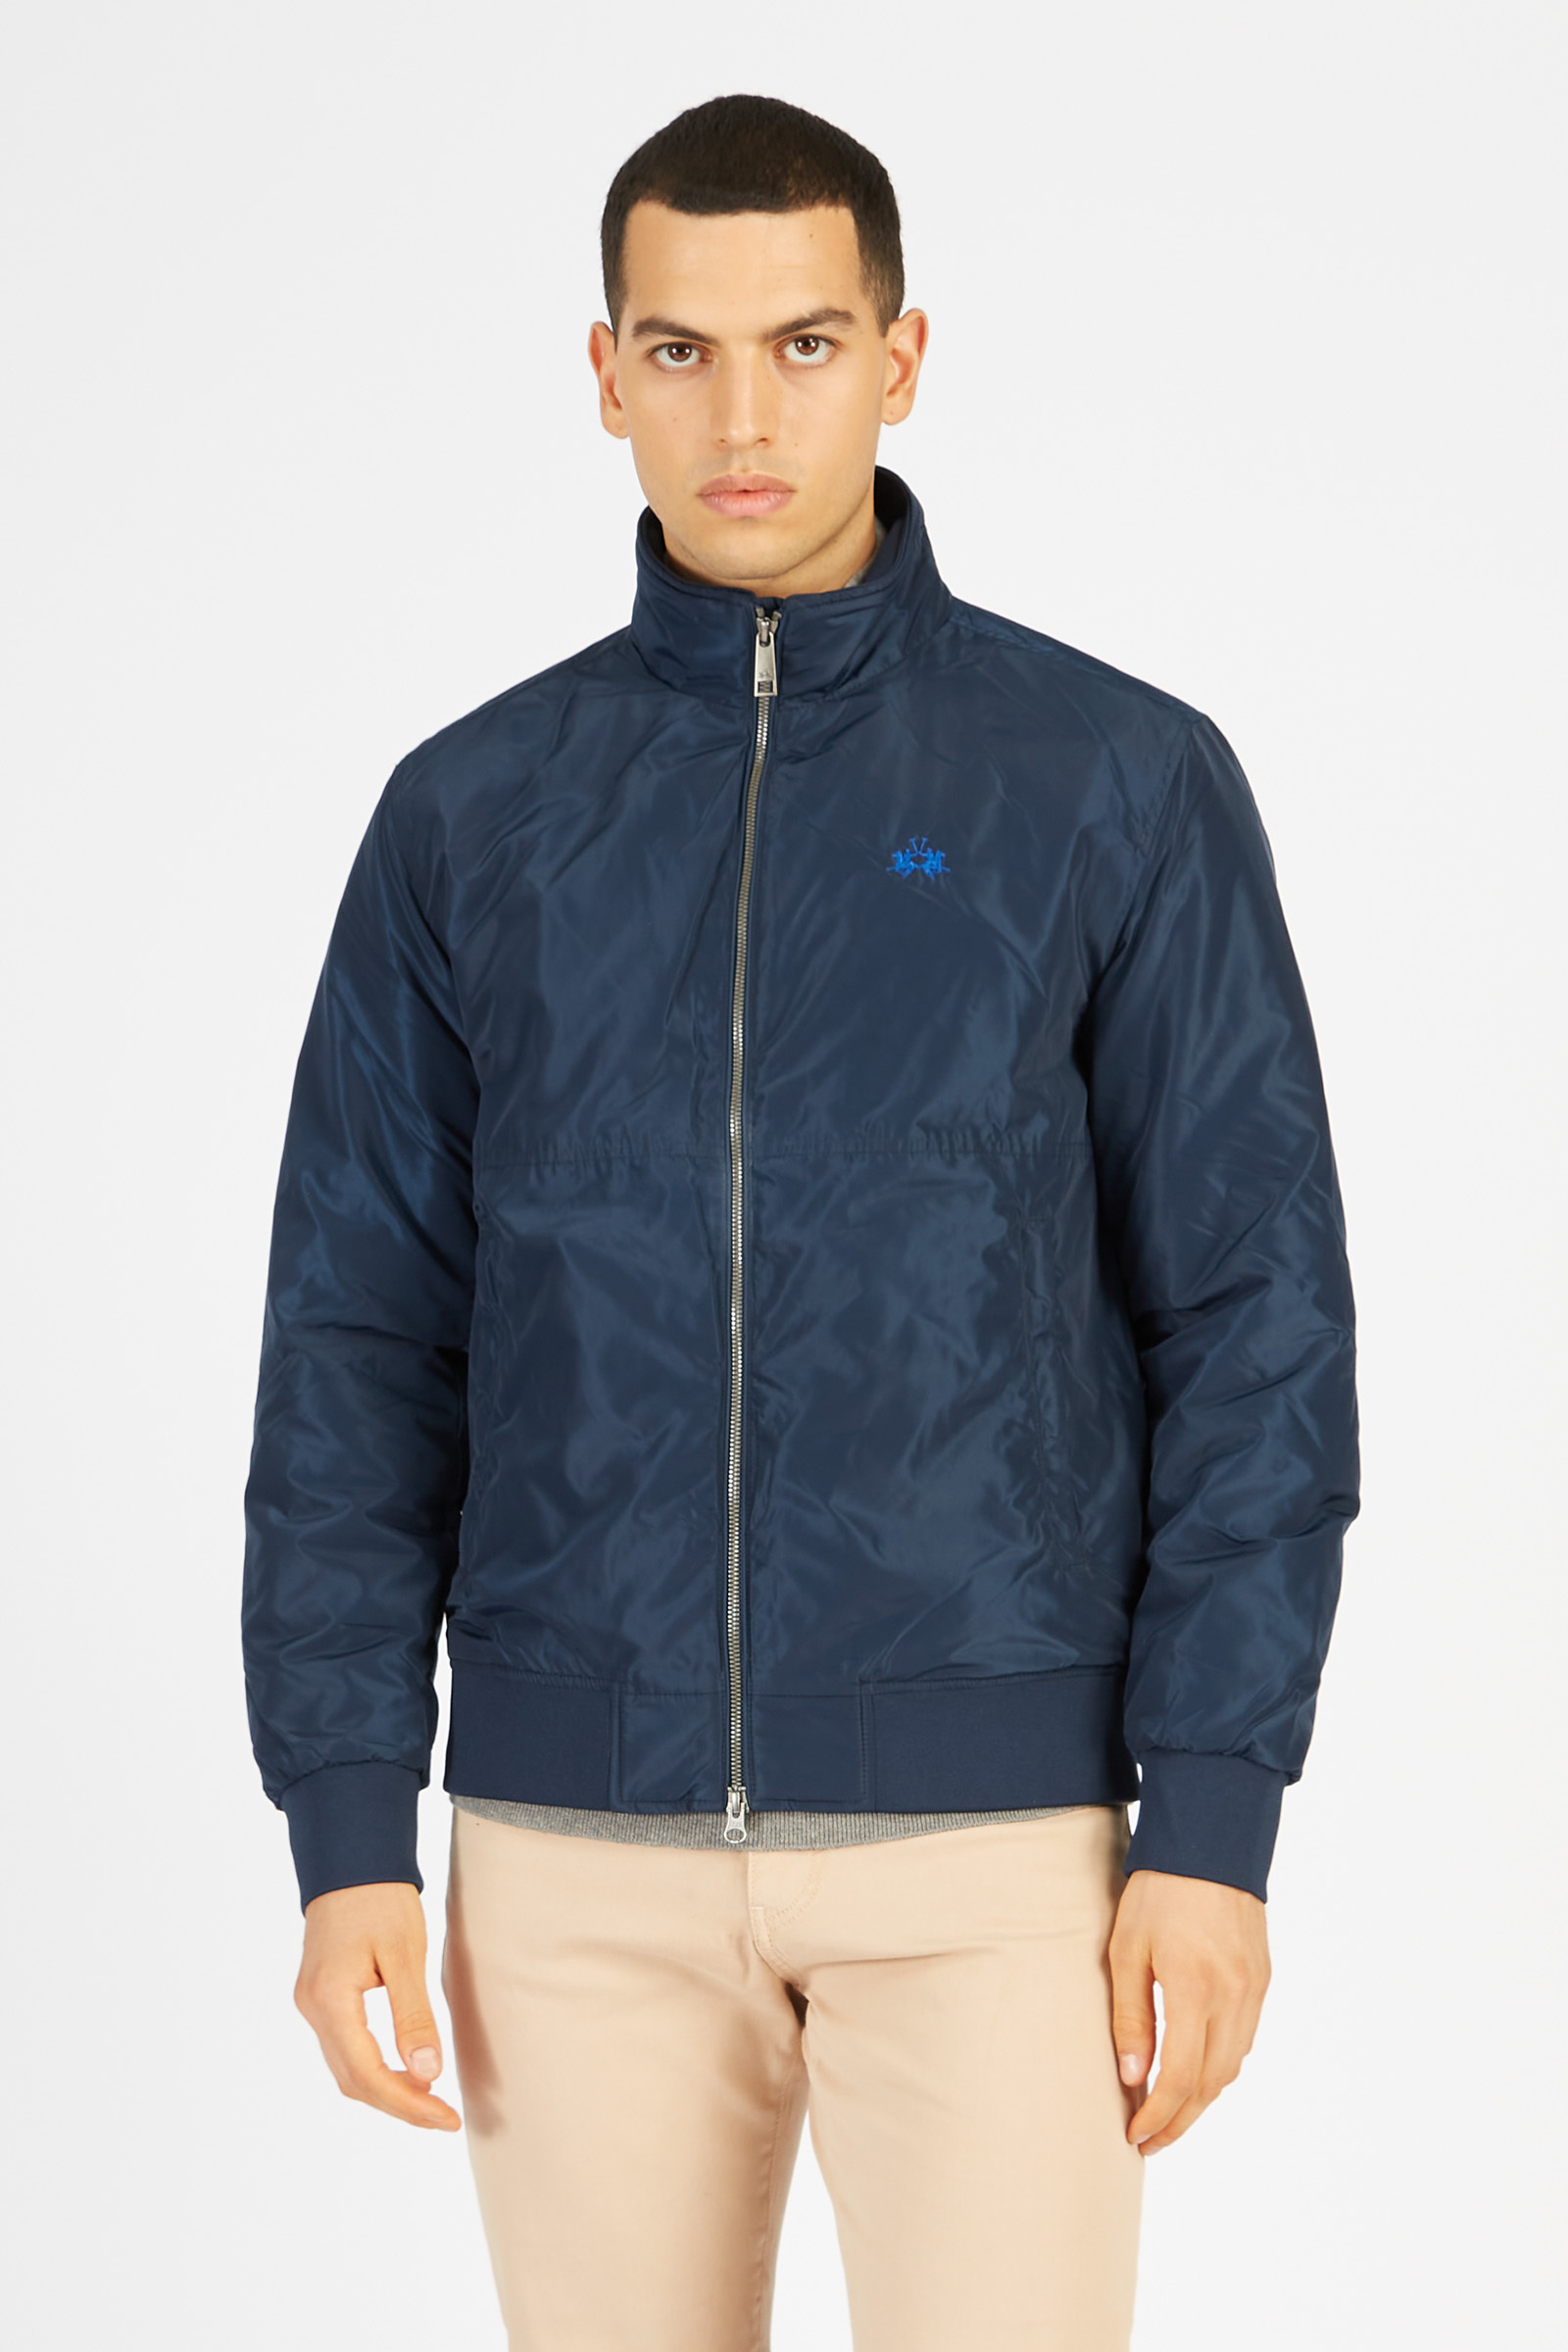 Men’s jacket in nylon regular fit model Navy La Martina | Shop Online